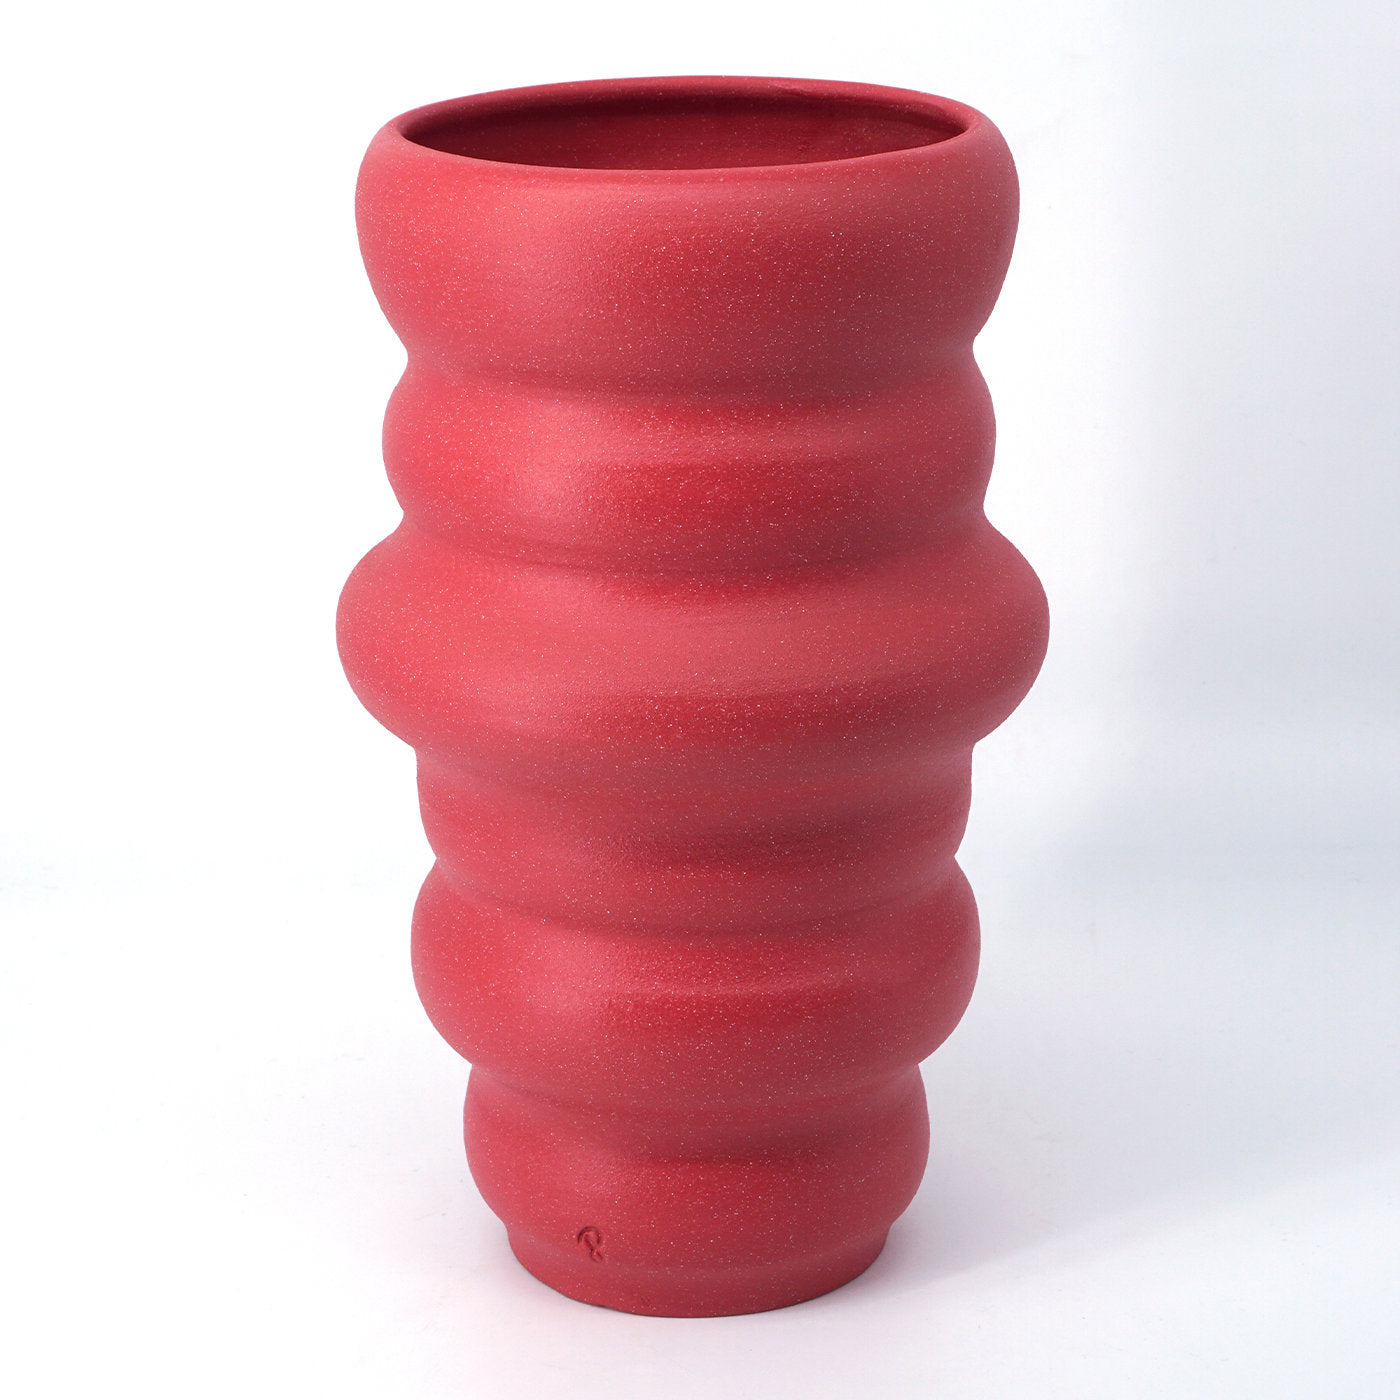 Crisalide Red Vase #3 - Alternative view 1